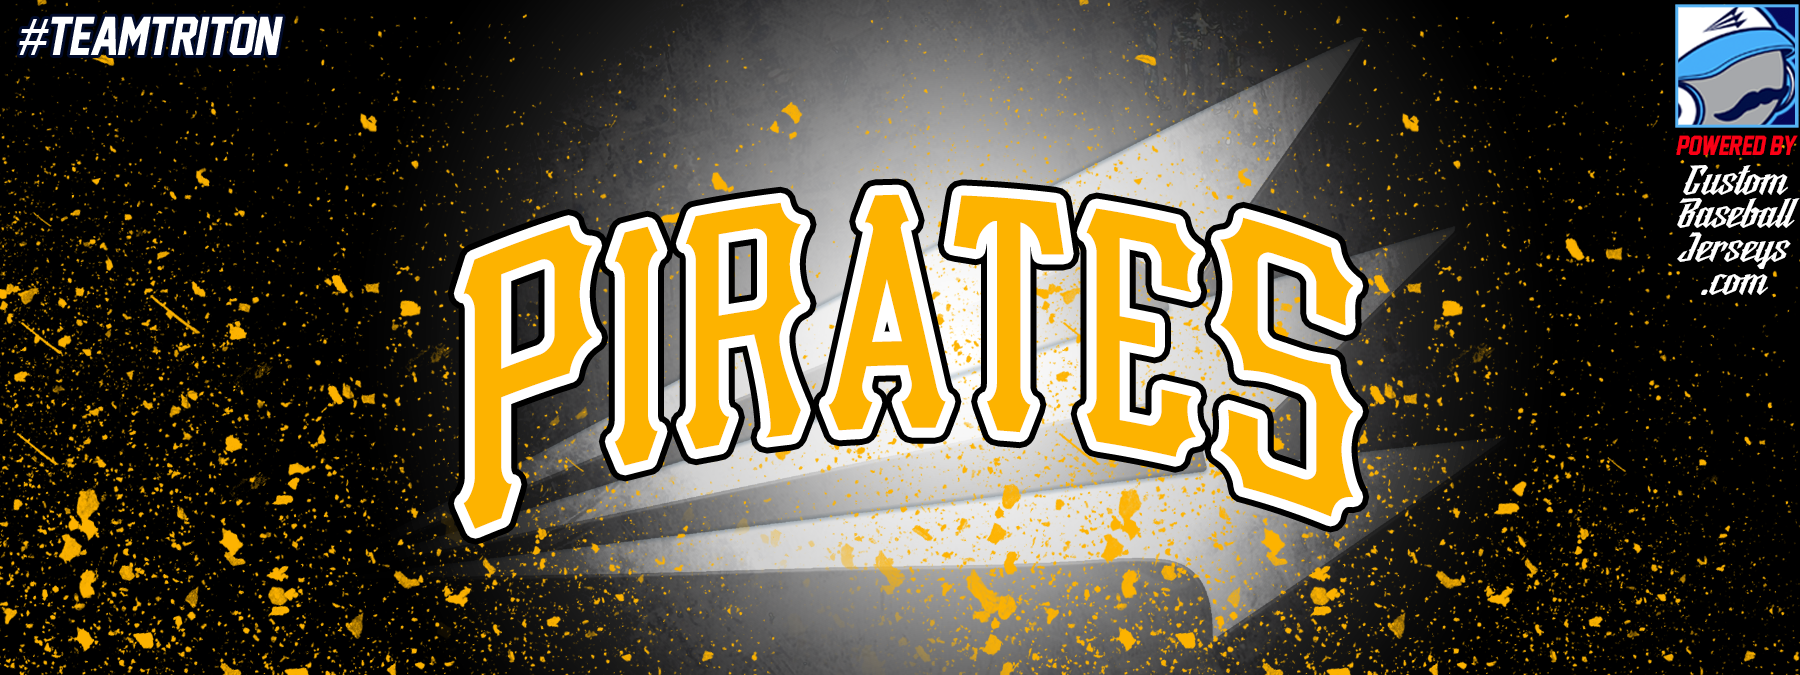 Pittsburgh Pirates 2010's - TAILGATING JERSEYS - CUSTOM JERSEYS